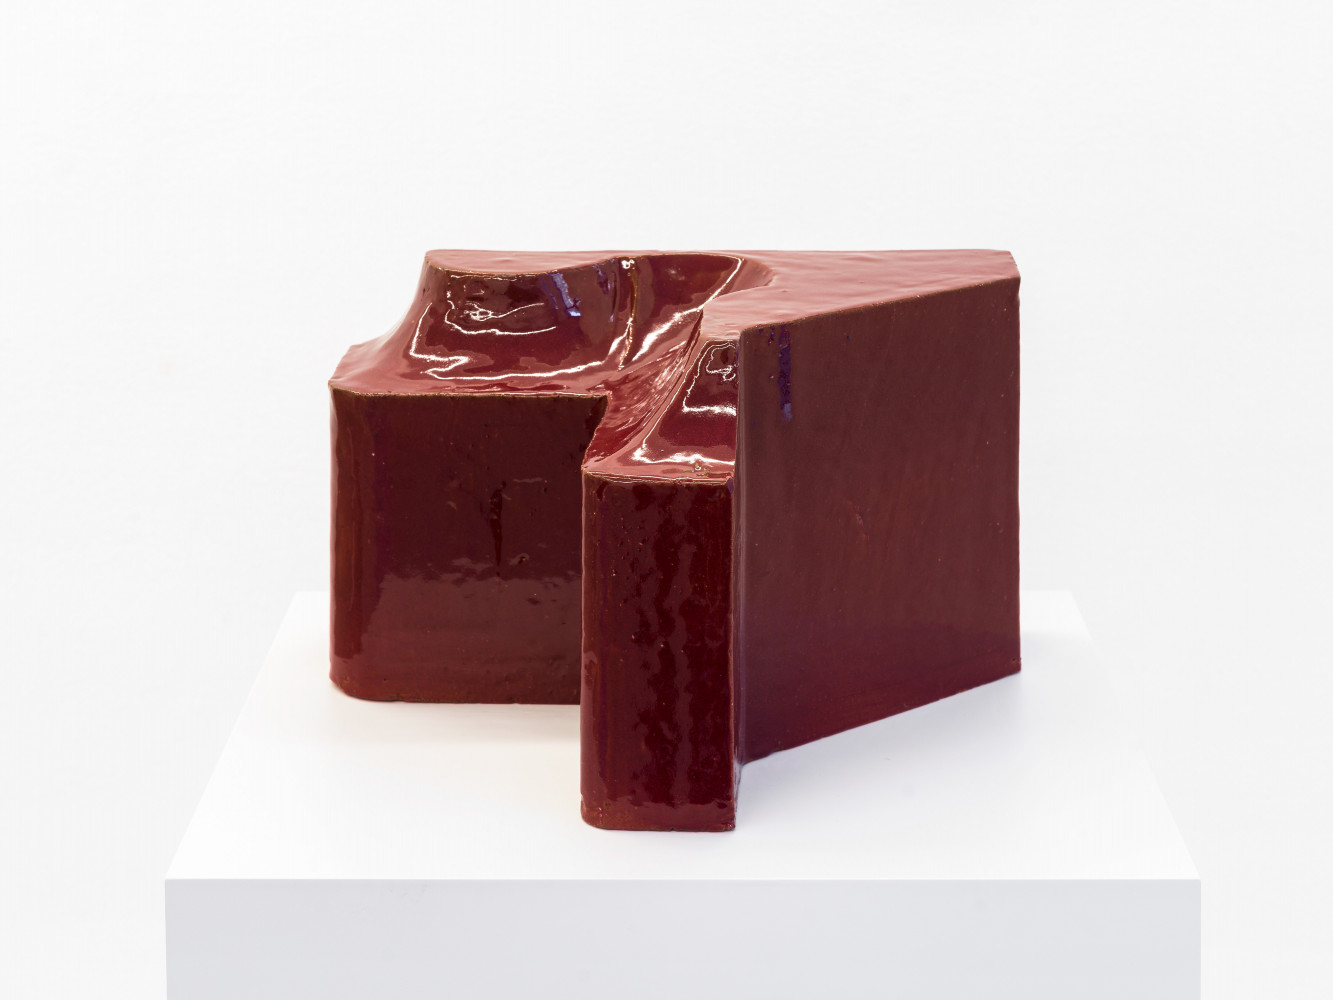 Bettina Pousttchi, ‘Noch ohne Titel’, Glazed ceramic